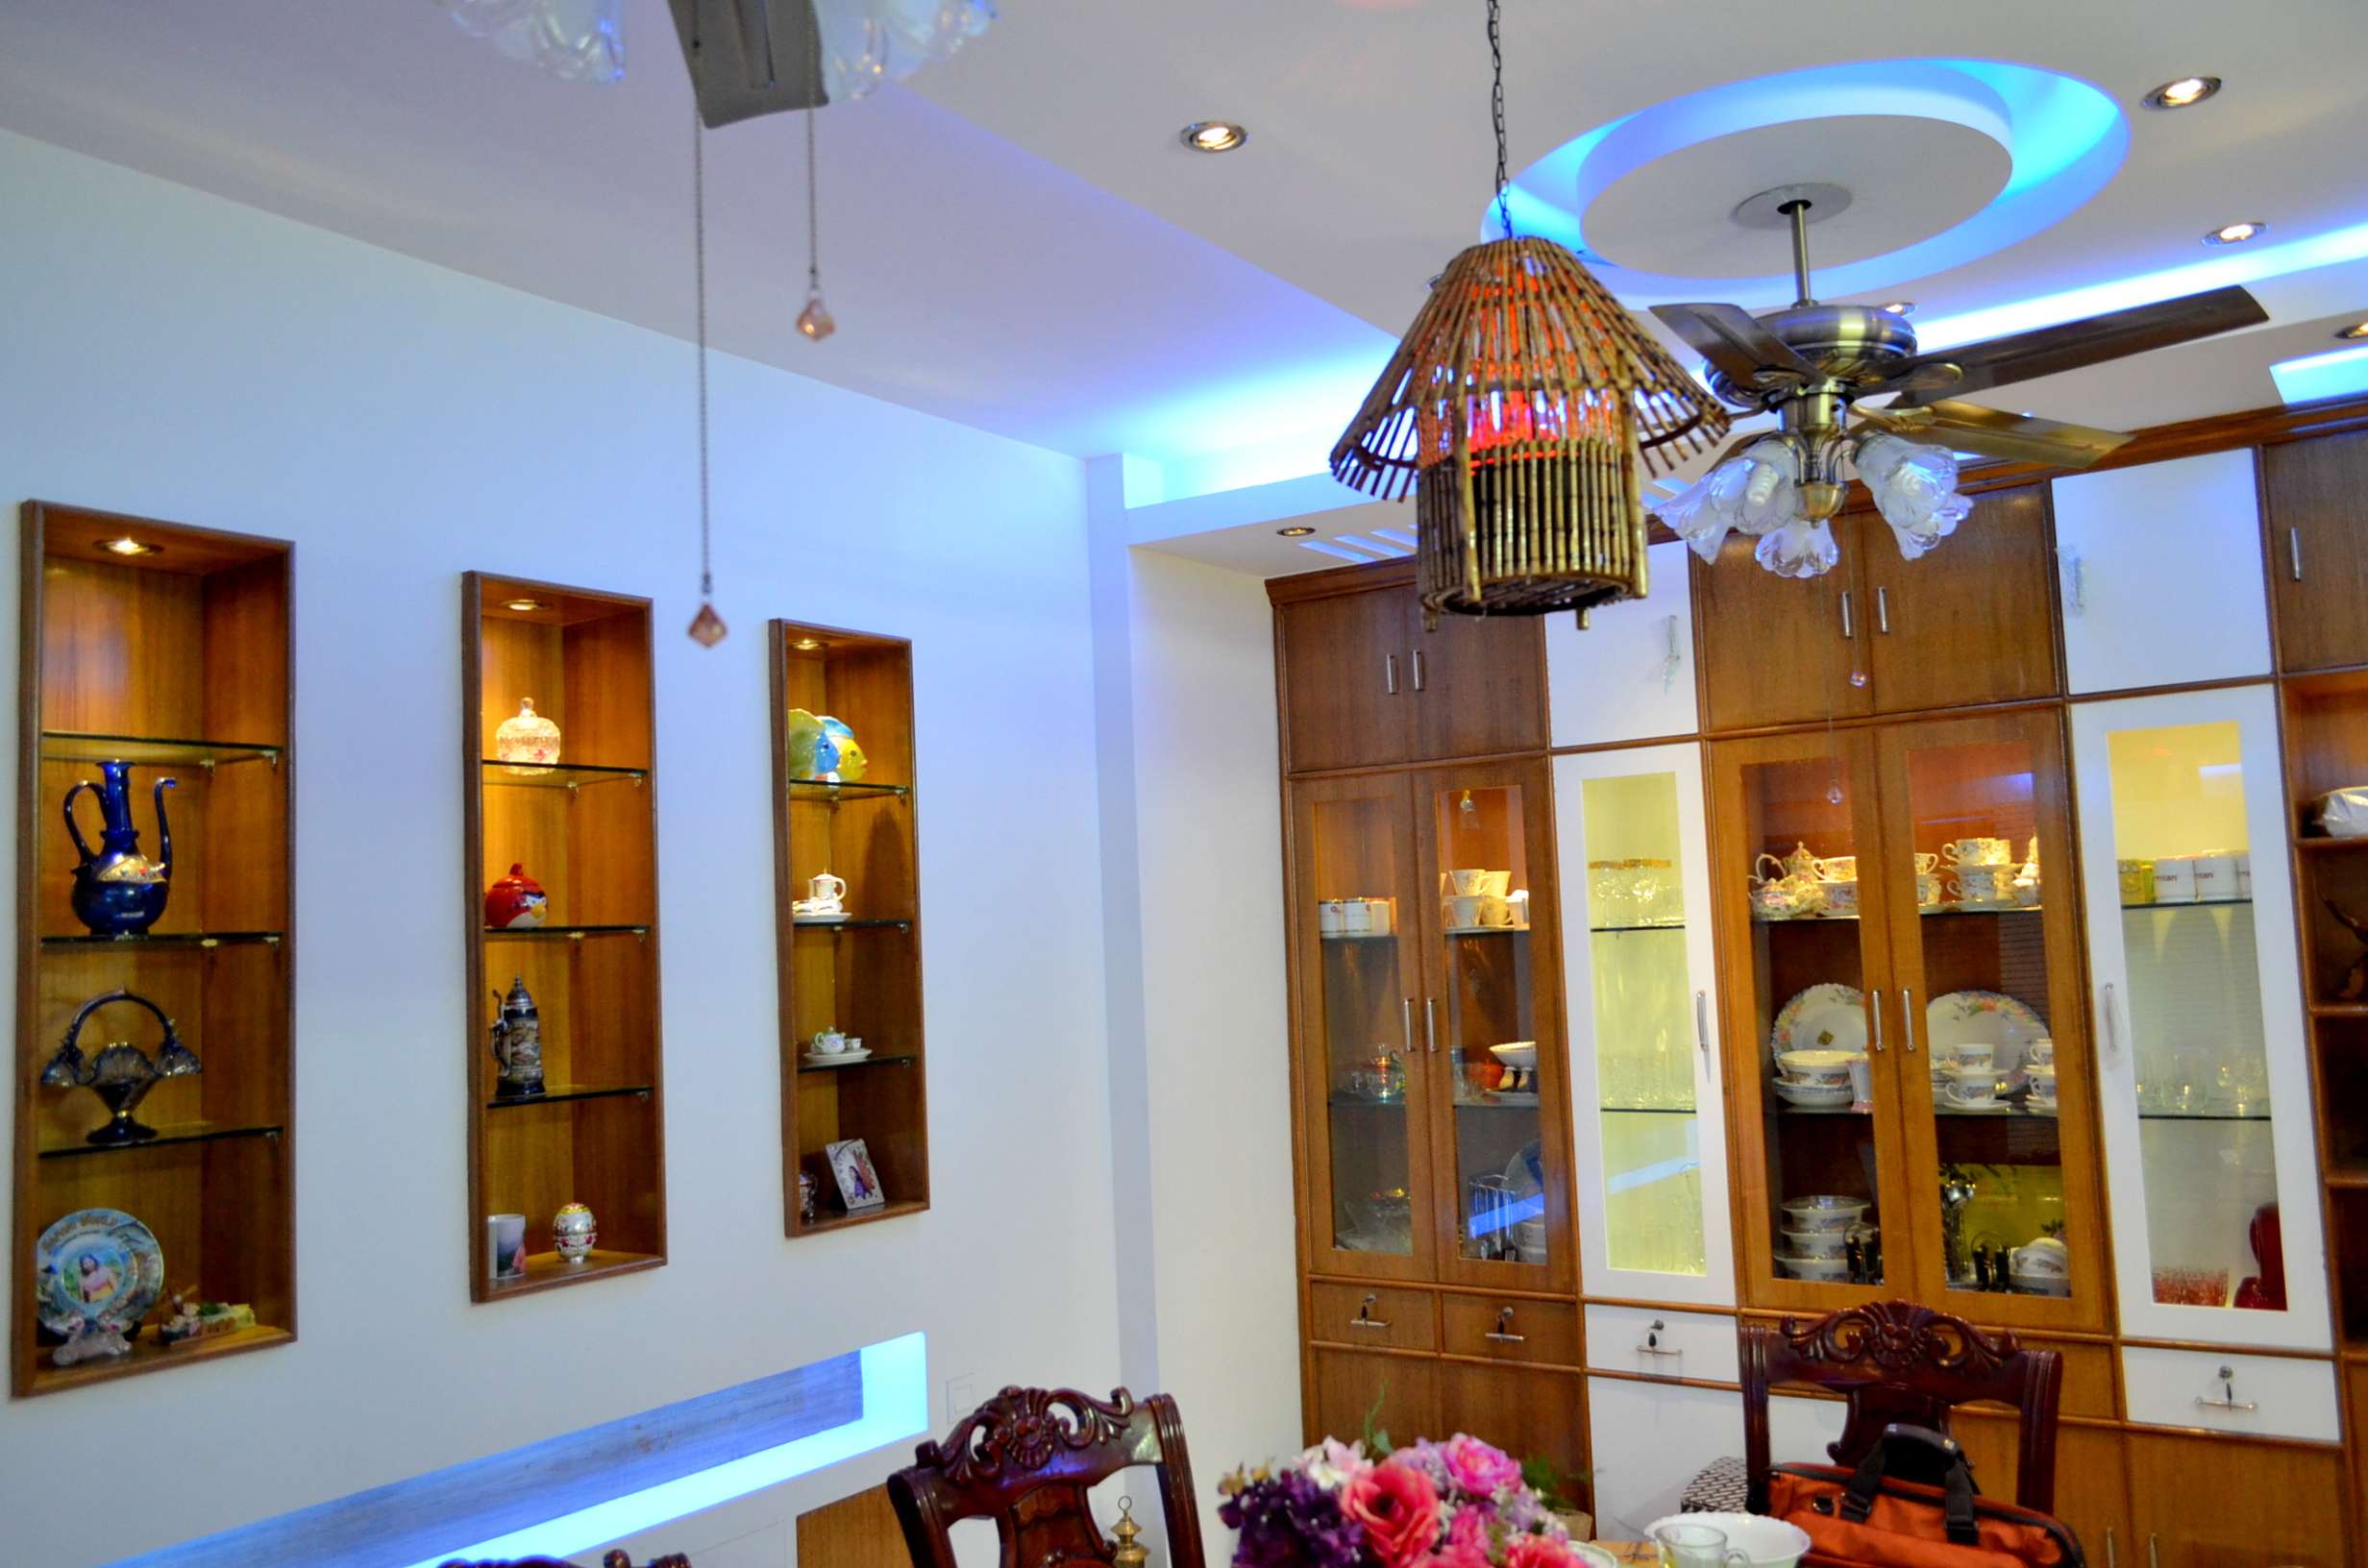 Masud Alam Dhanmondi Complete Project Home Interior Design (17)